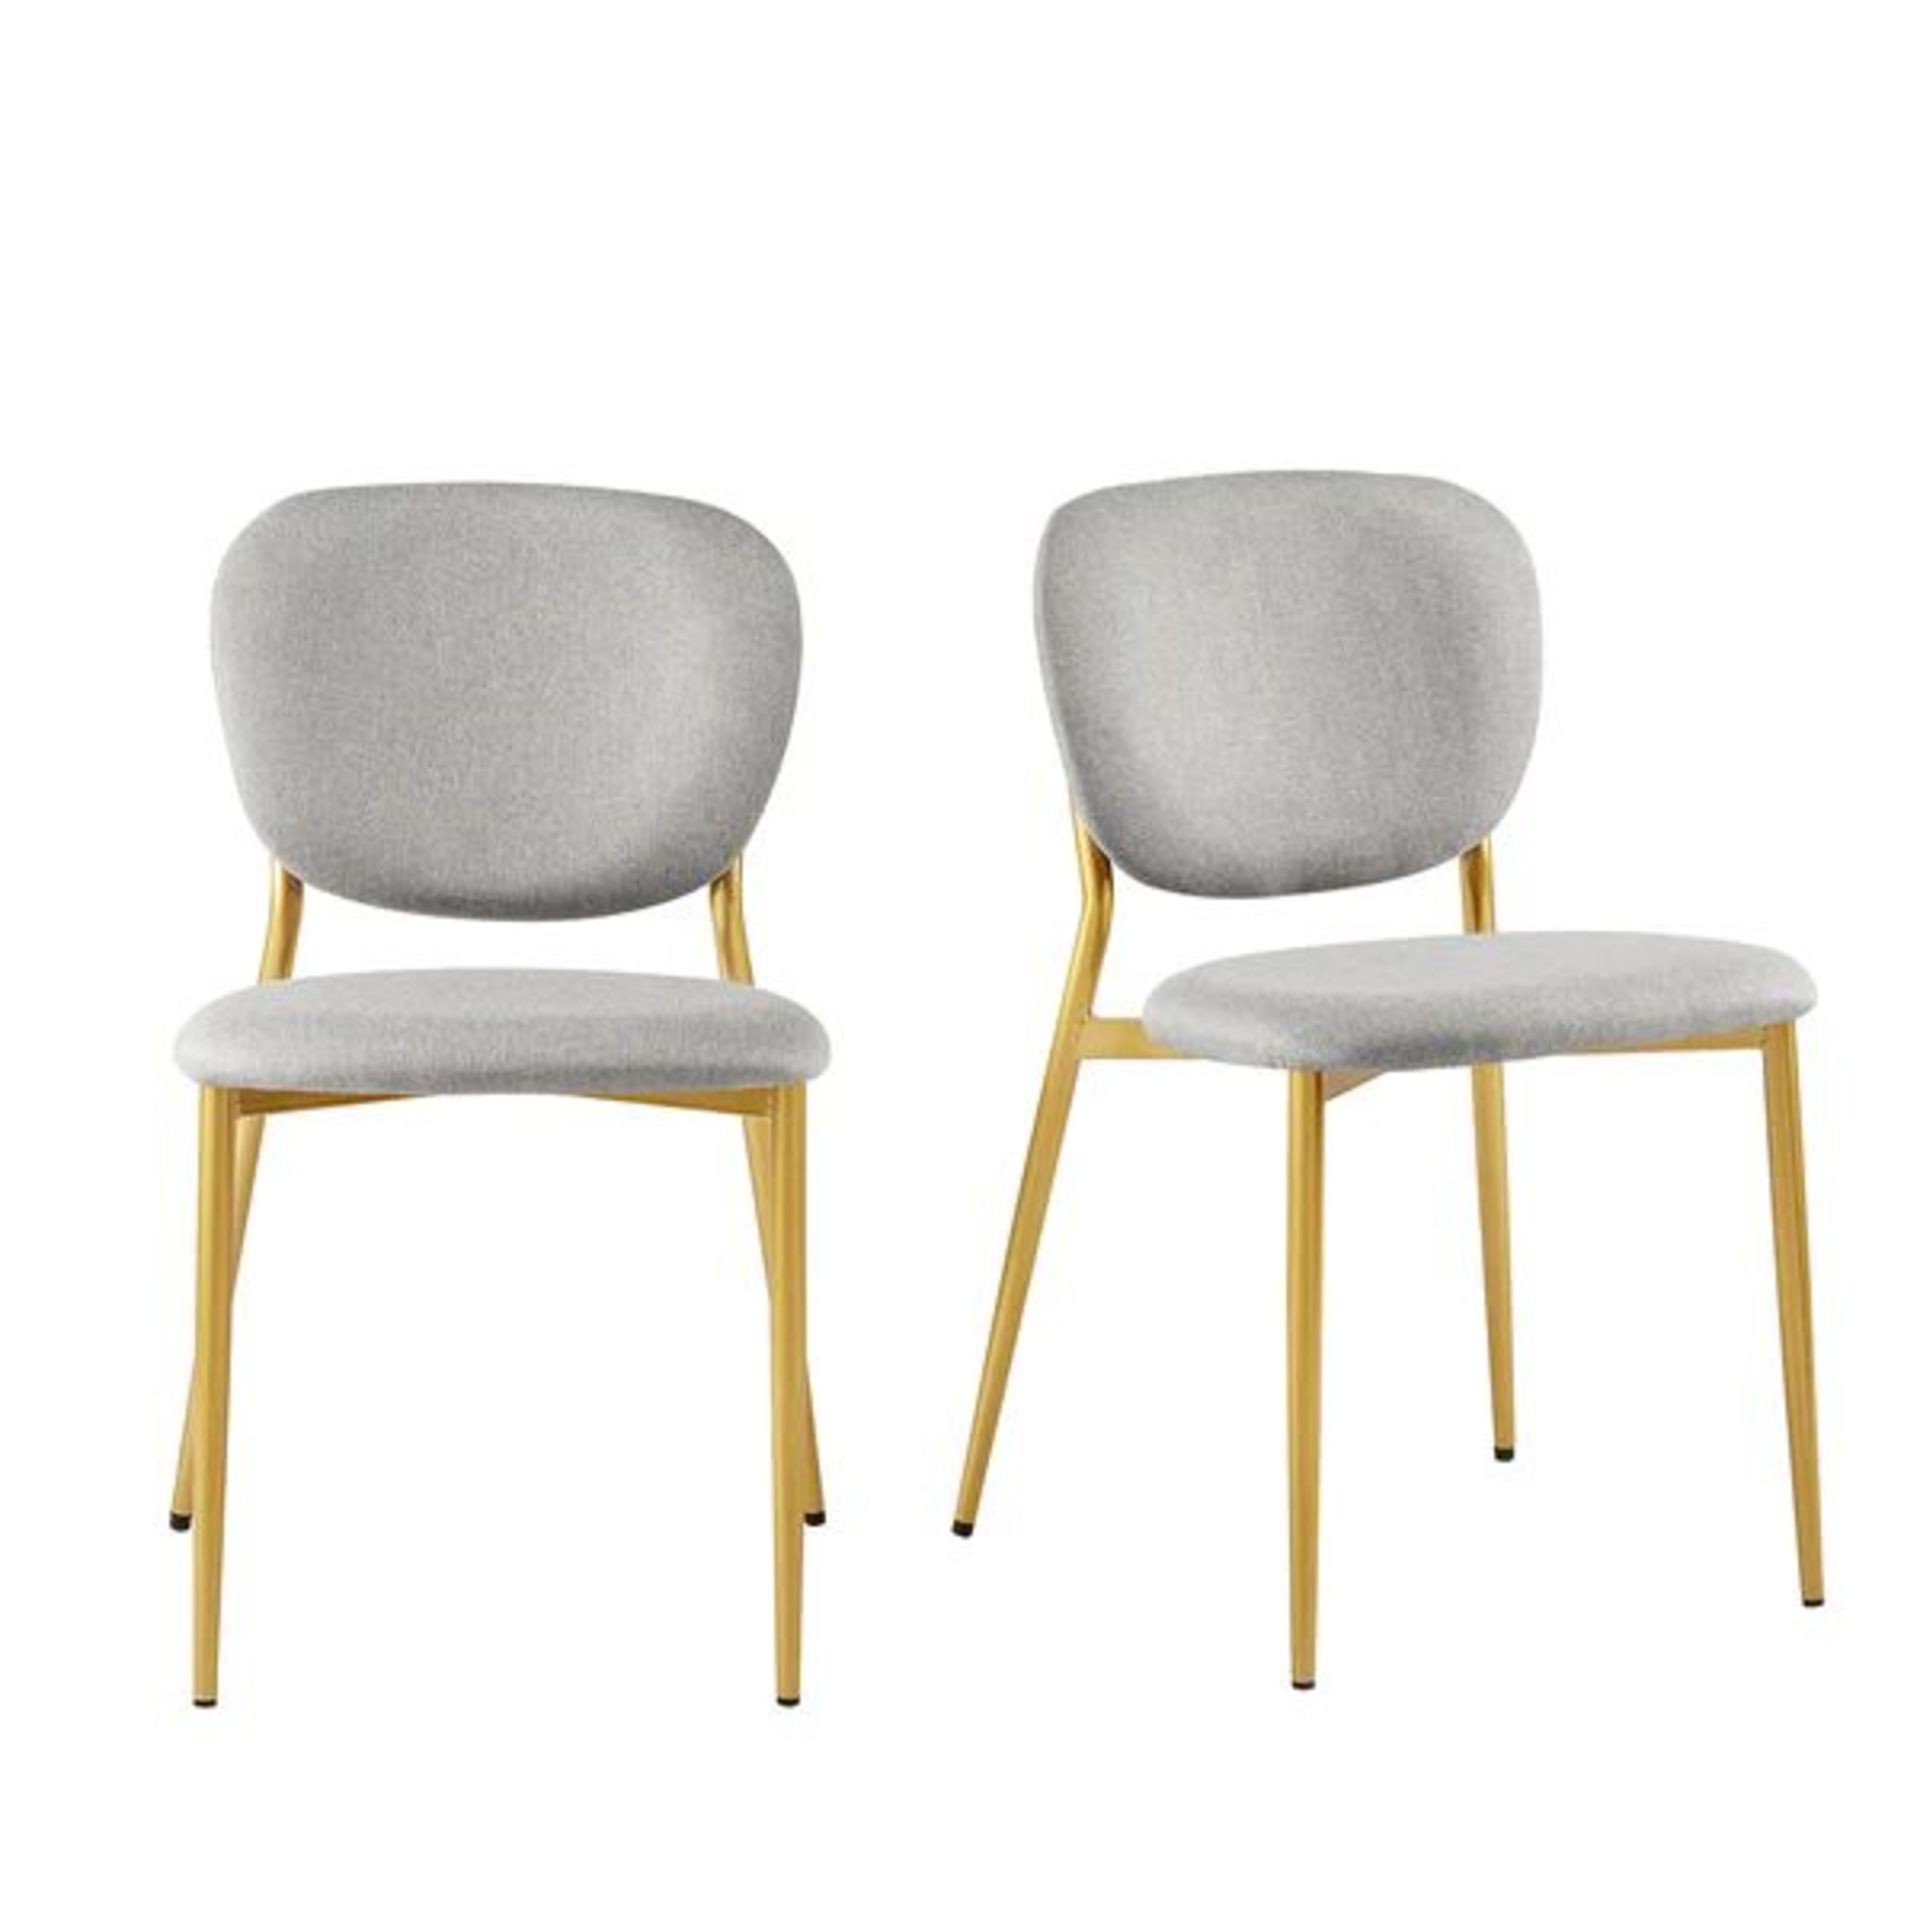 Kelmarsh Set of 2 Light Grey Fabric Upholstered Dining Chairs. - R14. RRP £219.00. Our Kelmarsh - Bild 2 aus 2